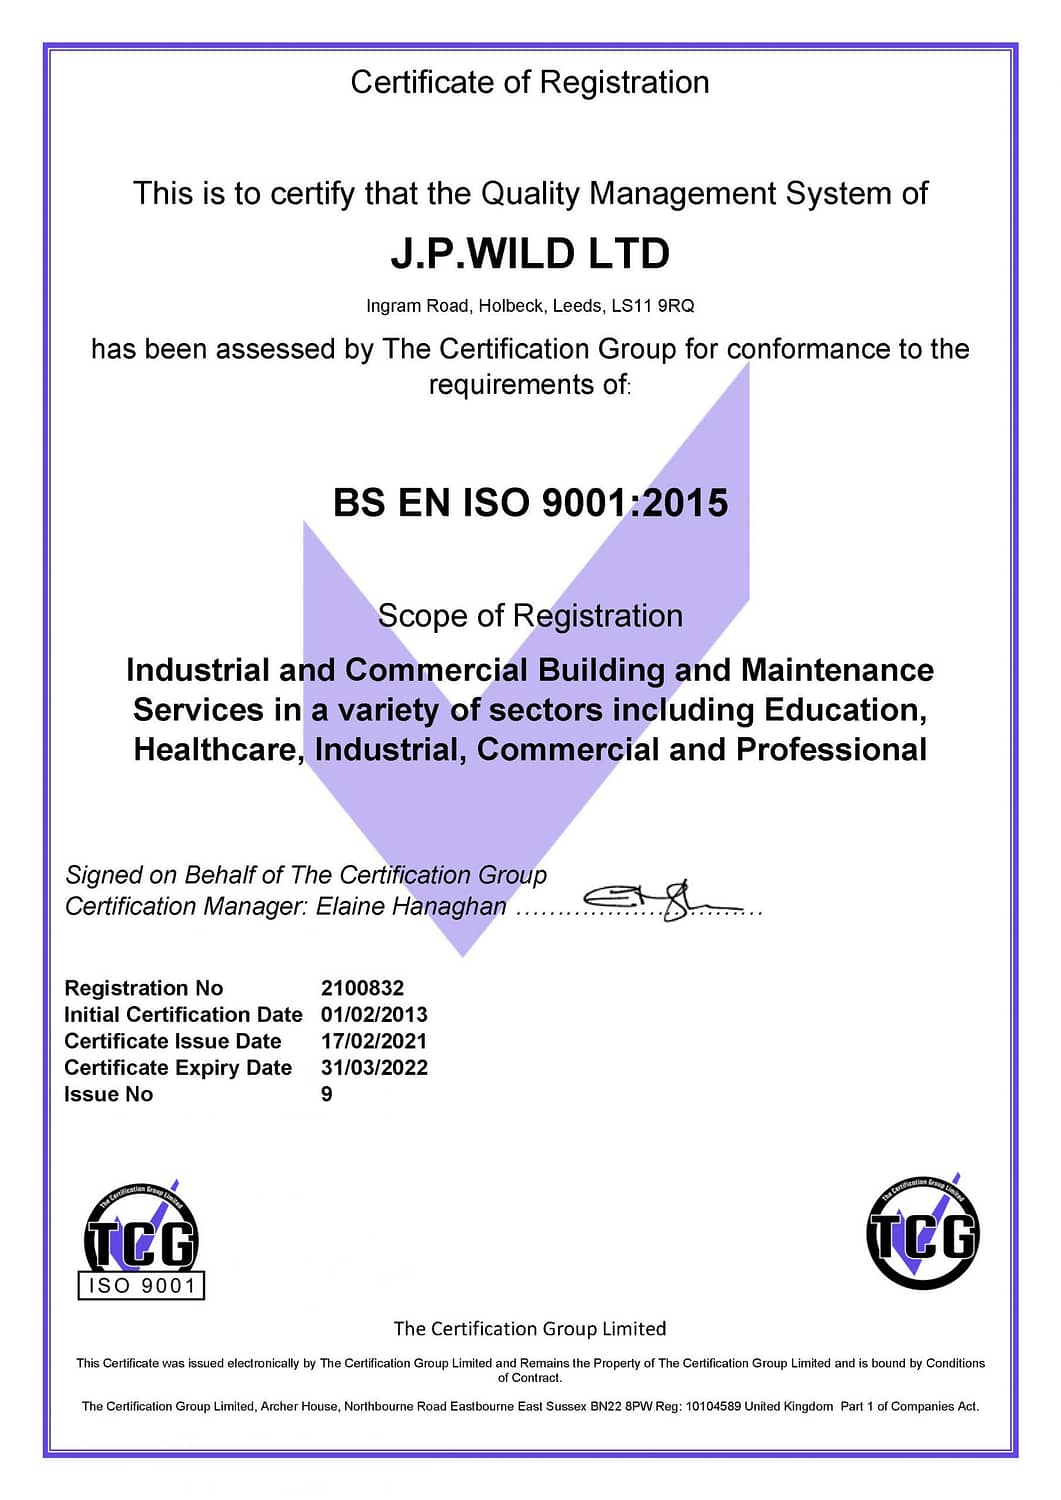 ISO 9001 2015 Certificate - J.P.WILD LTD (17022021)